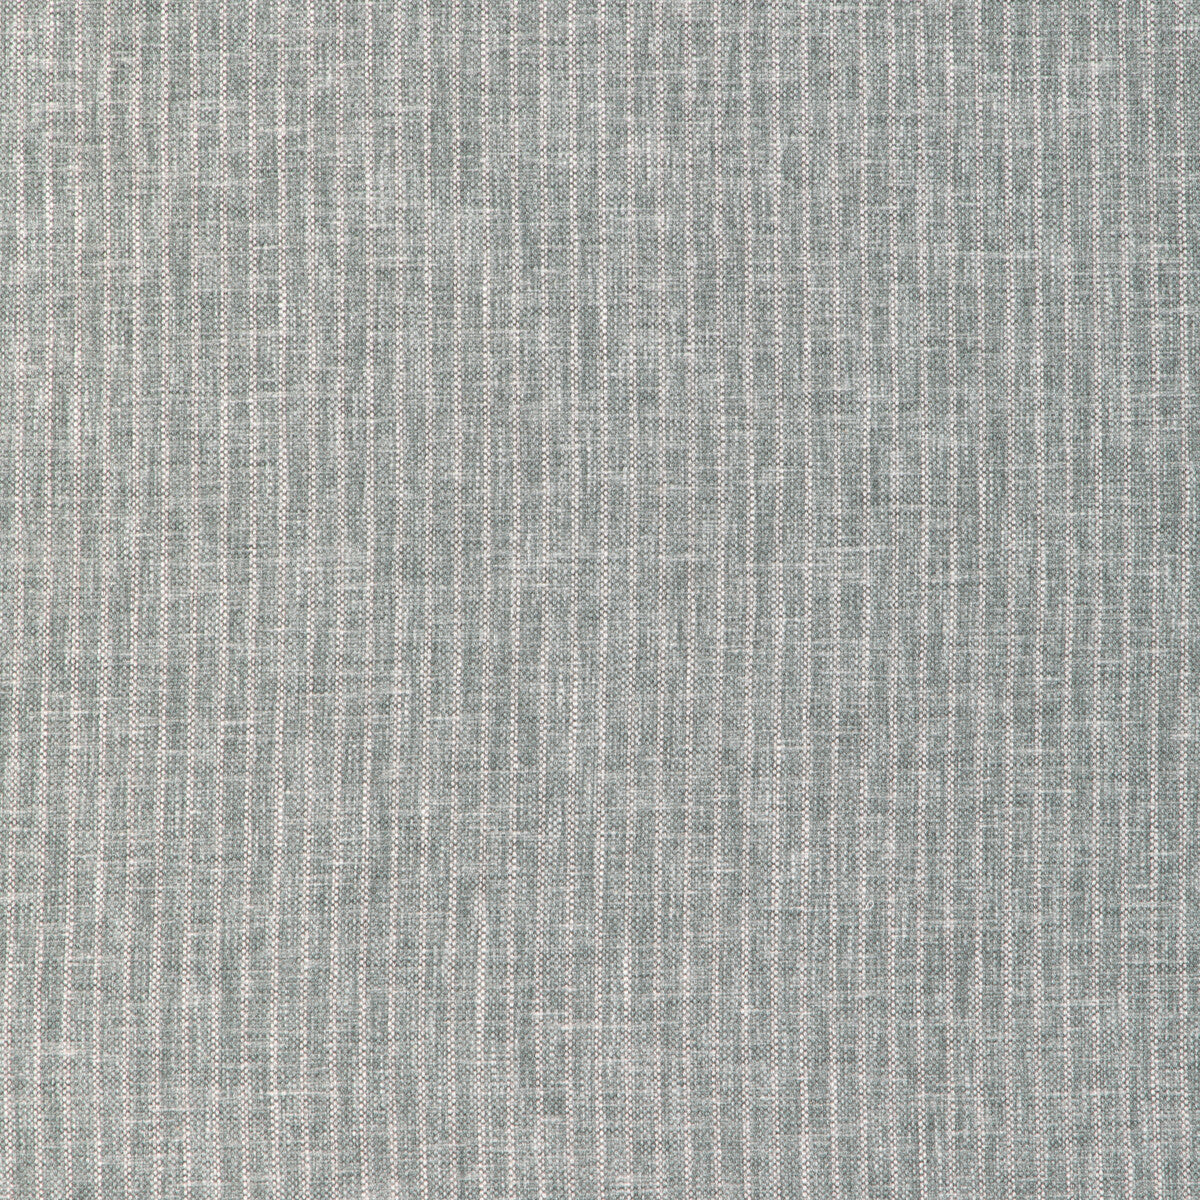 Kravet Smart fabric in 36655-135 color - pattern 36655.135.0 - by Kravet Smart in the Performance Kravetarmor collection